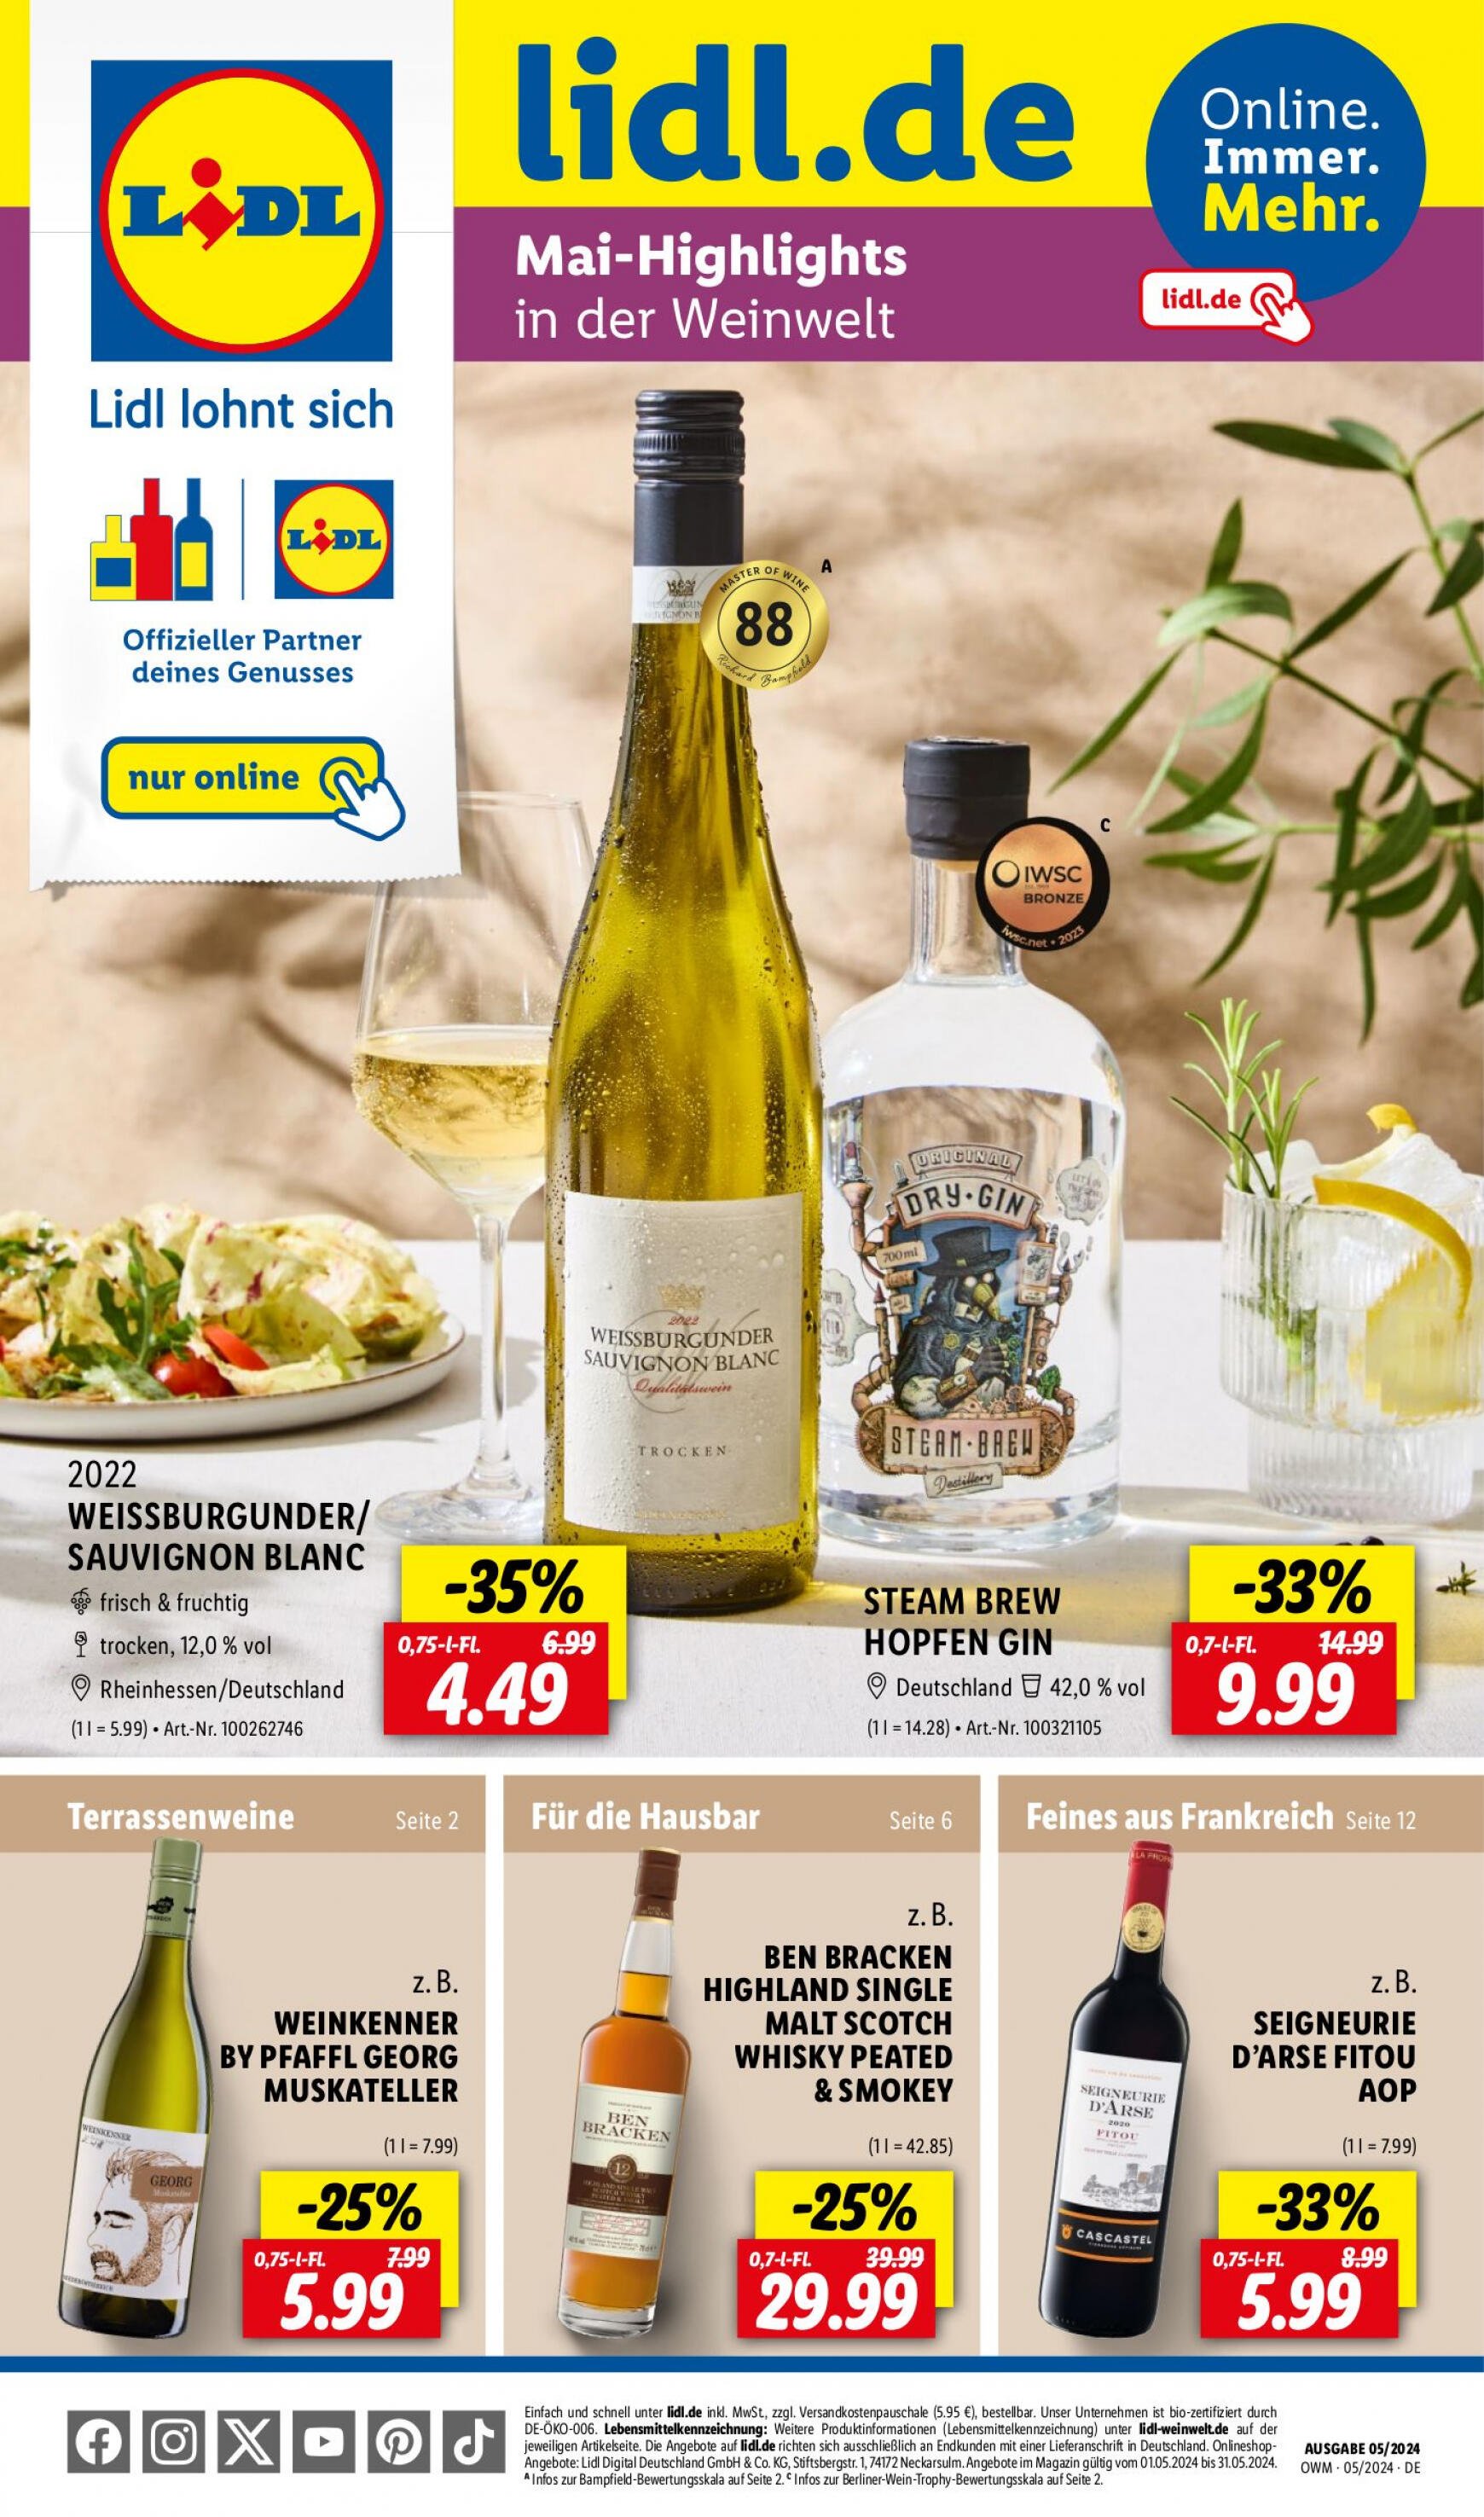 lidl - Flyer Lidl - Highlights in der Weinwelt aktuell 01.05. - 31.05. - page: 1